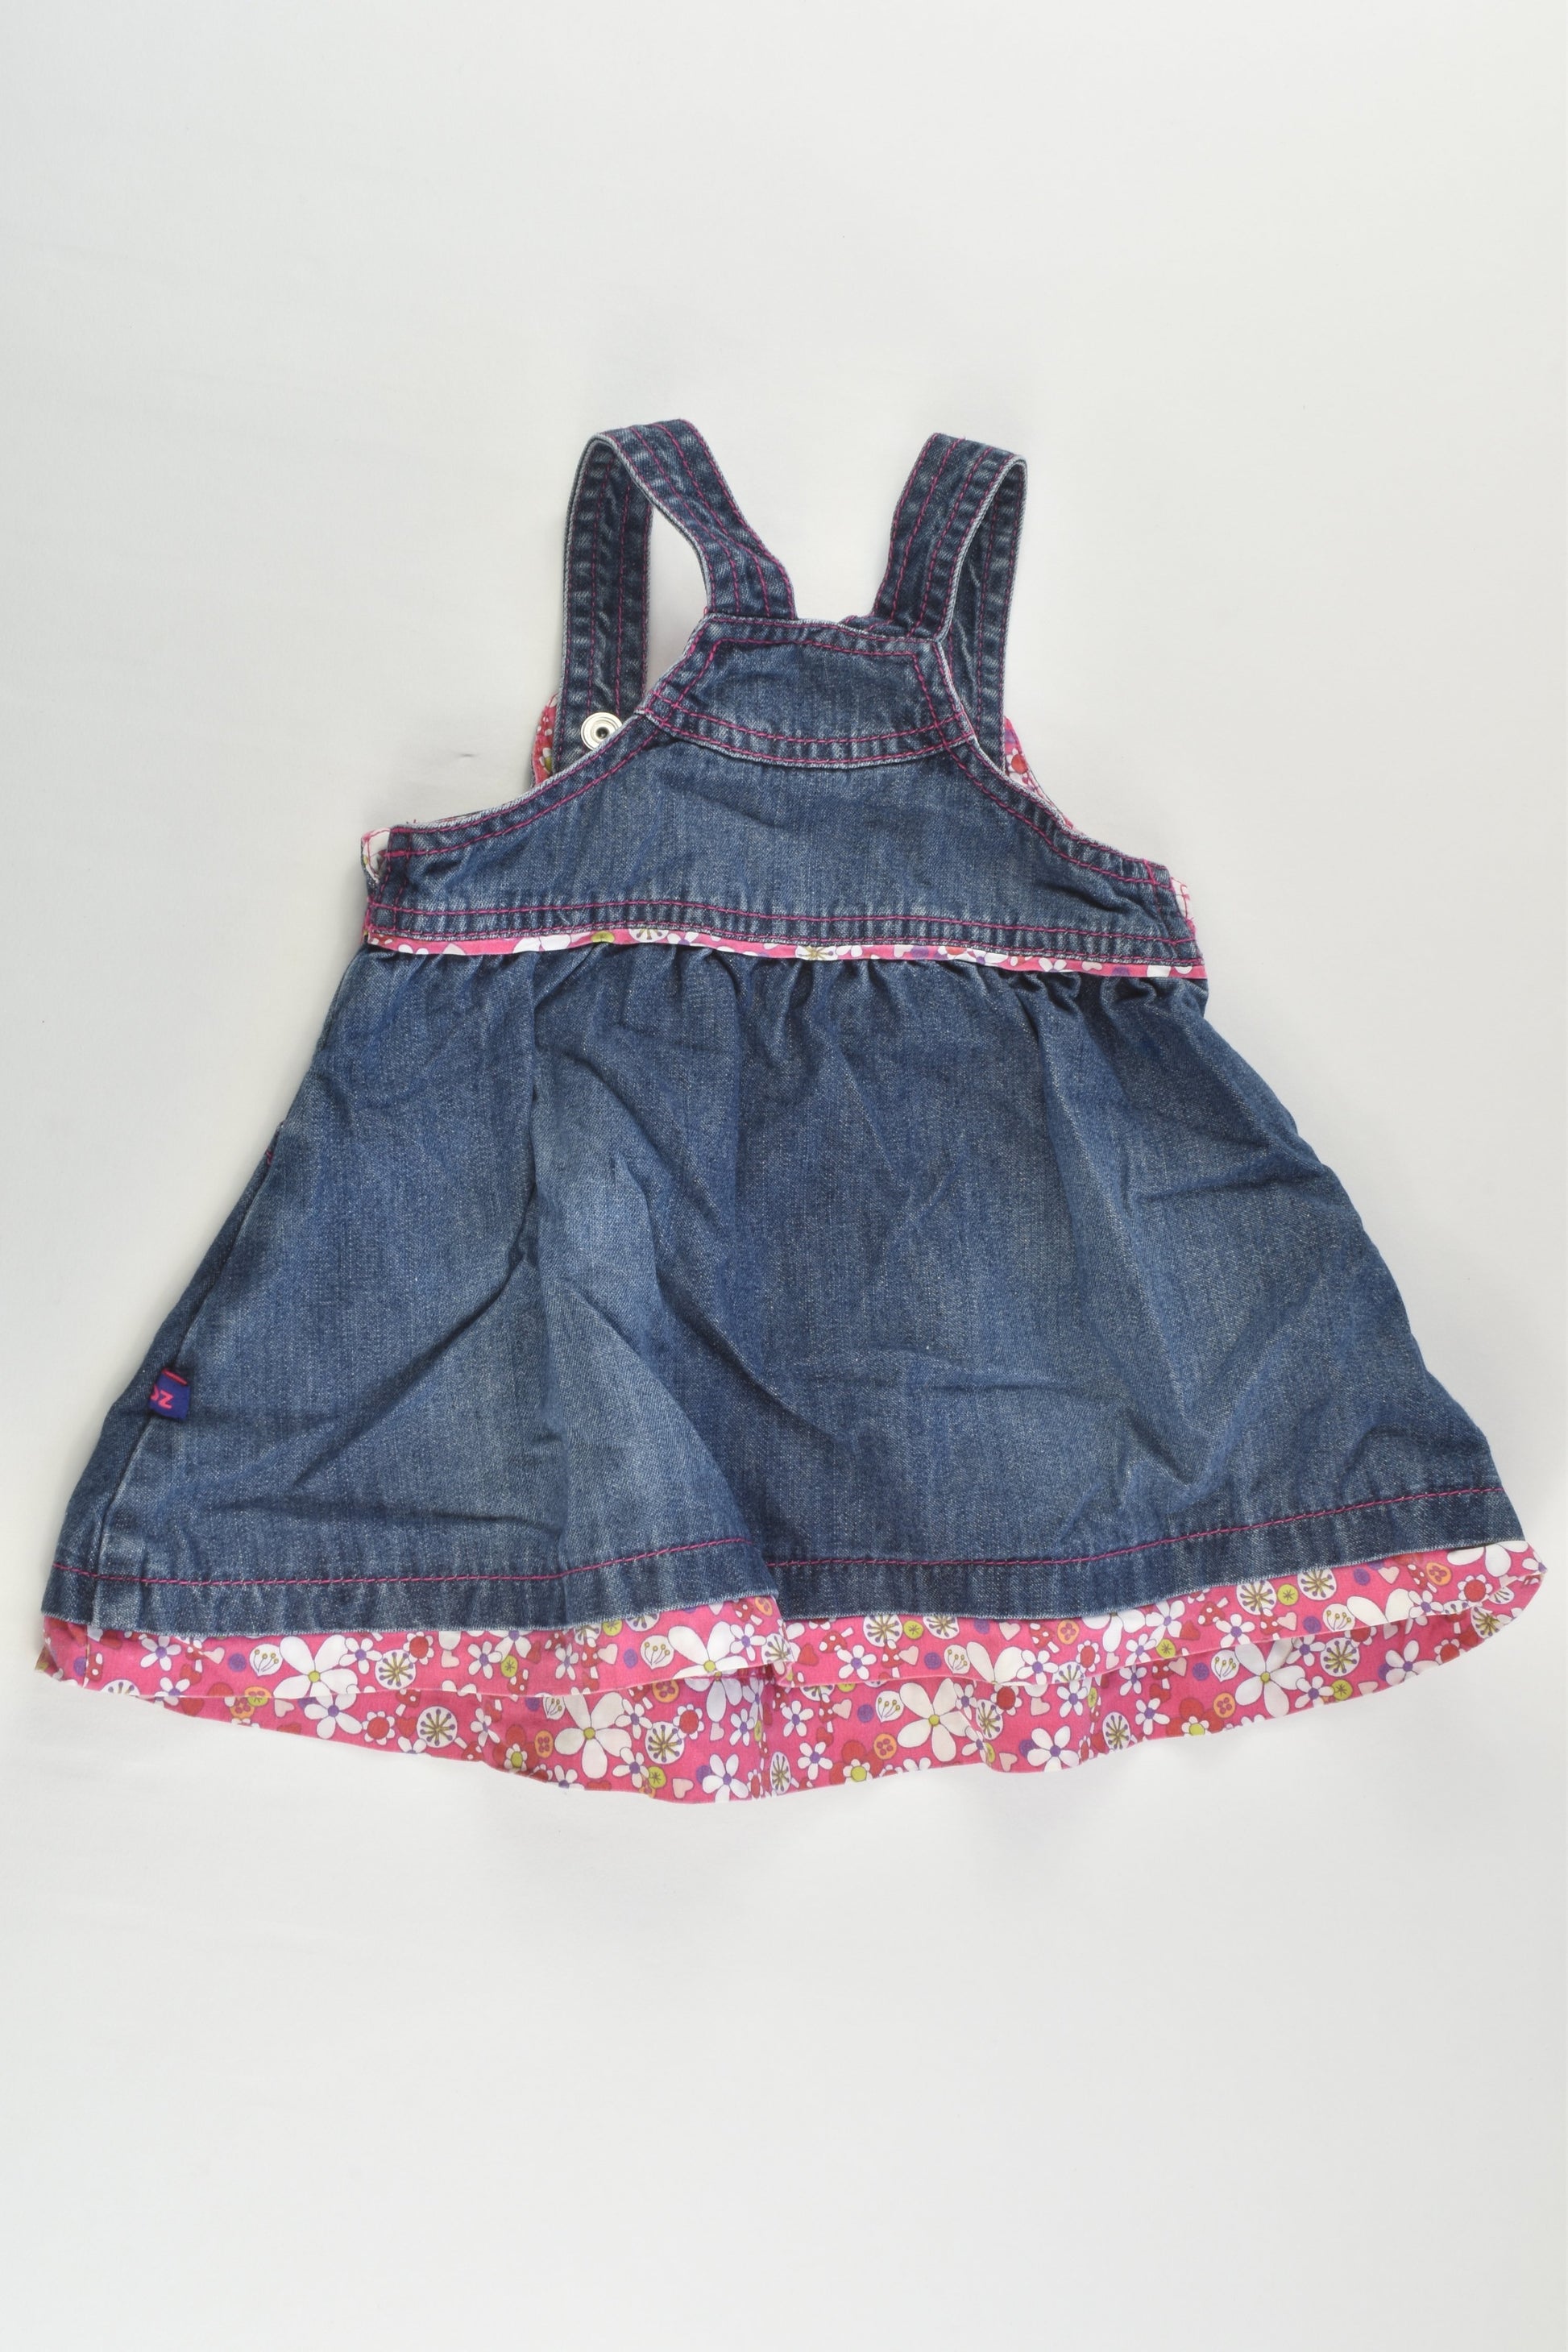 Bluezoo by Debenhams Size 00 (3-6 months, 68 cm) Denim Dress